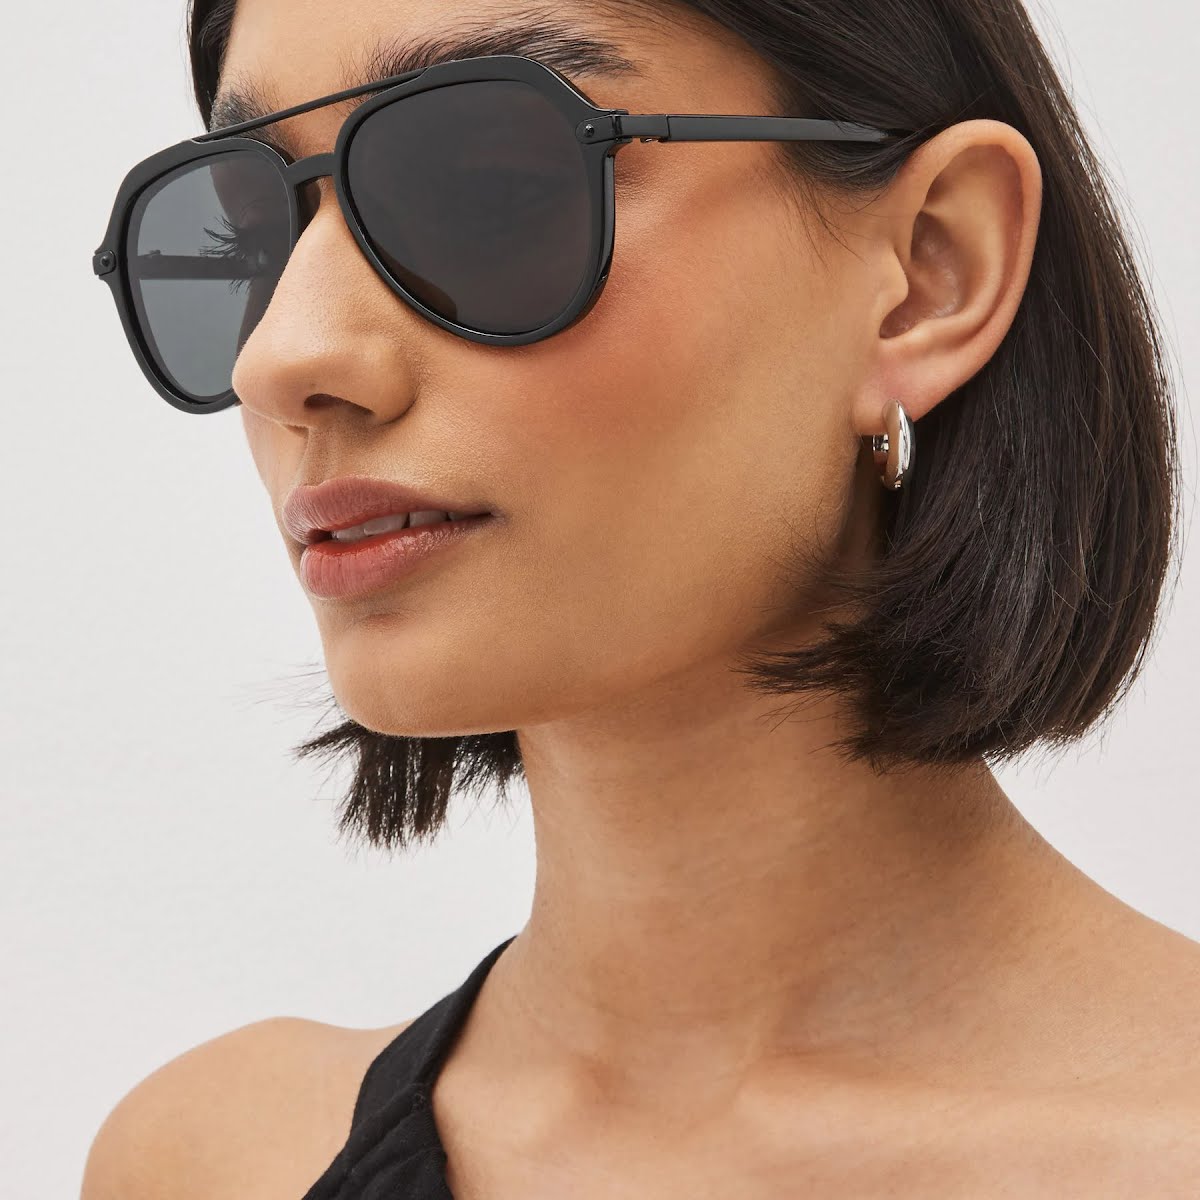 Aviator Style Polarised Sunglasses, €22, Next